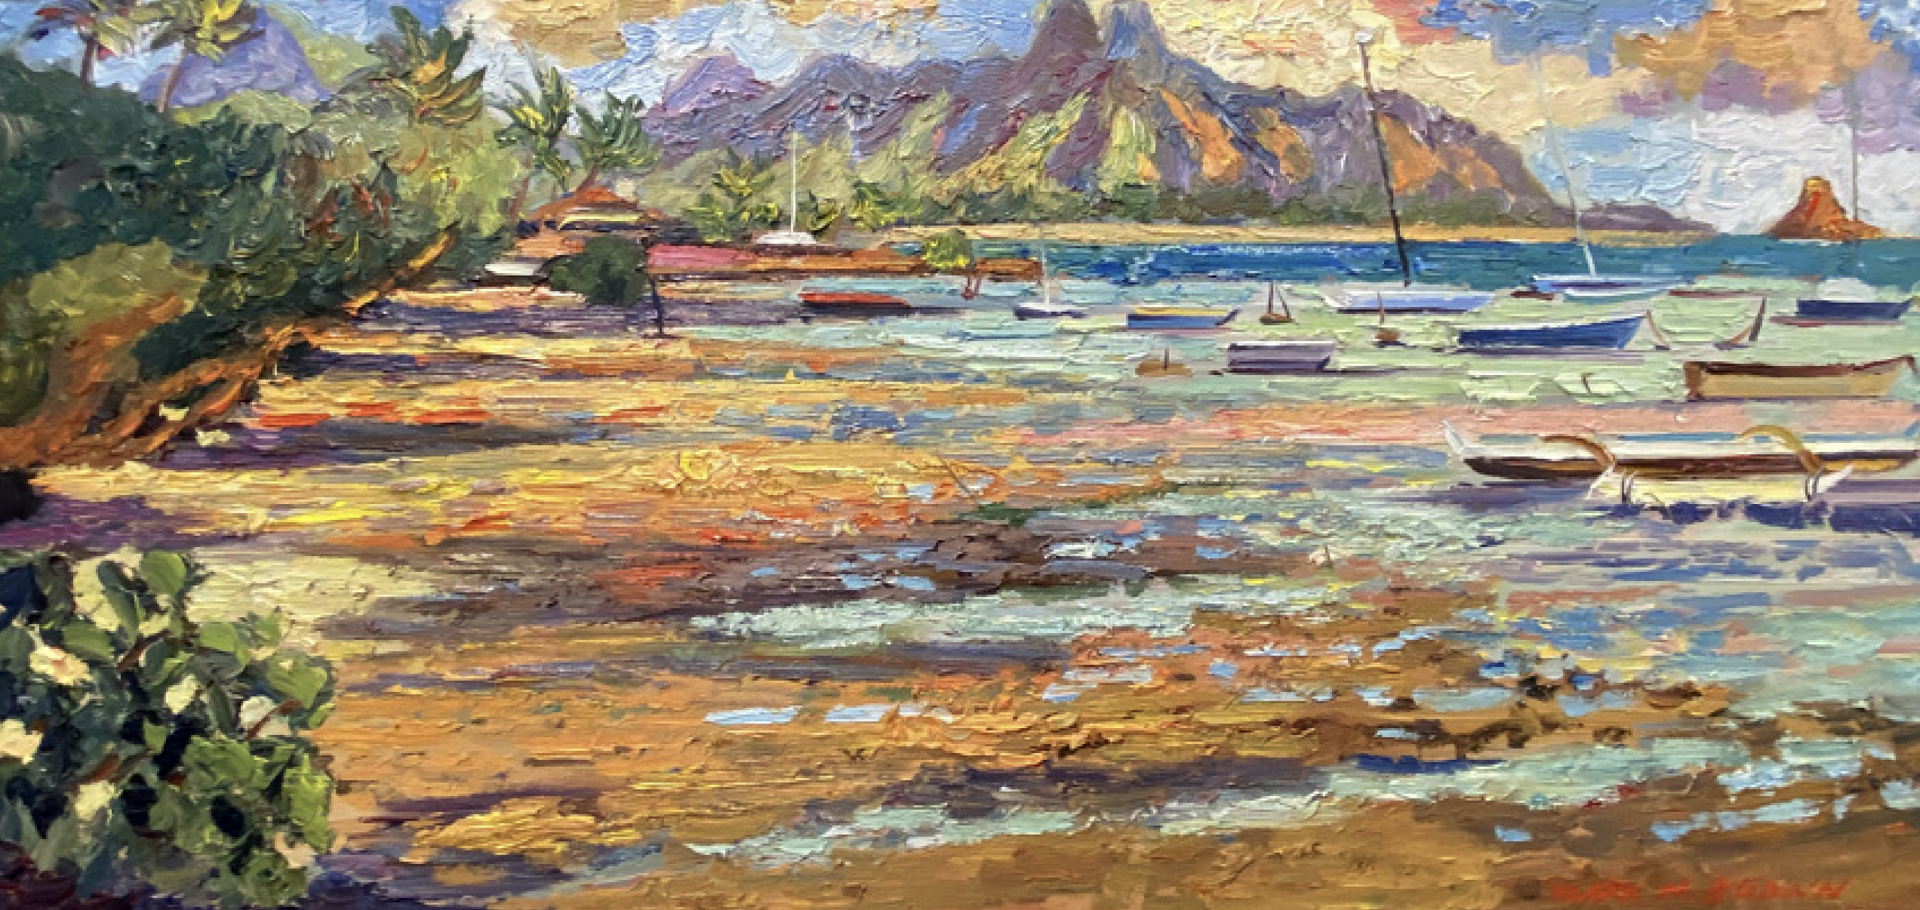 Heʻeia Mud Flats by Mark Brown